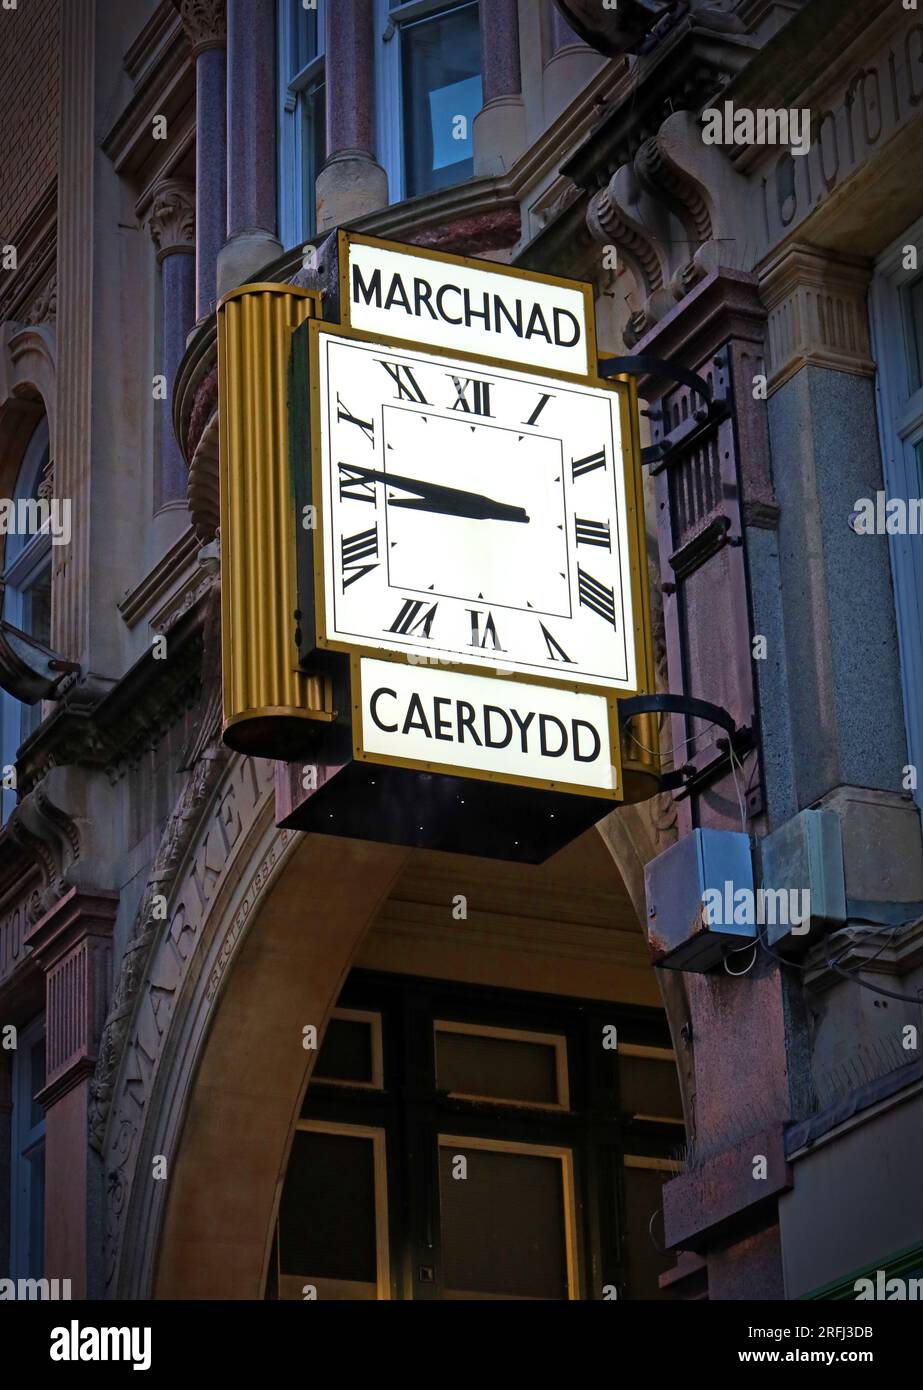 Cardiff Market Building and clock 1891 - Marchnad Caaerdydd, Castle Quarter, 49 St. Mary Street, Cardiff, Wales, UK, CF10 1AU Stock Photo